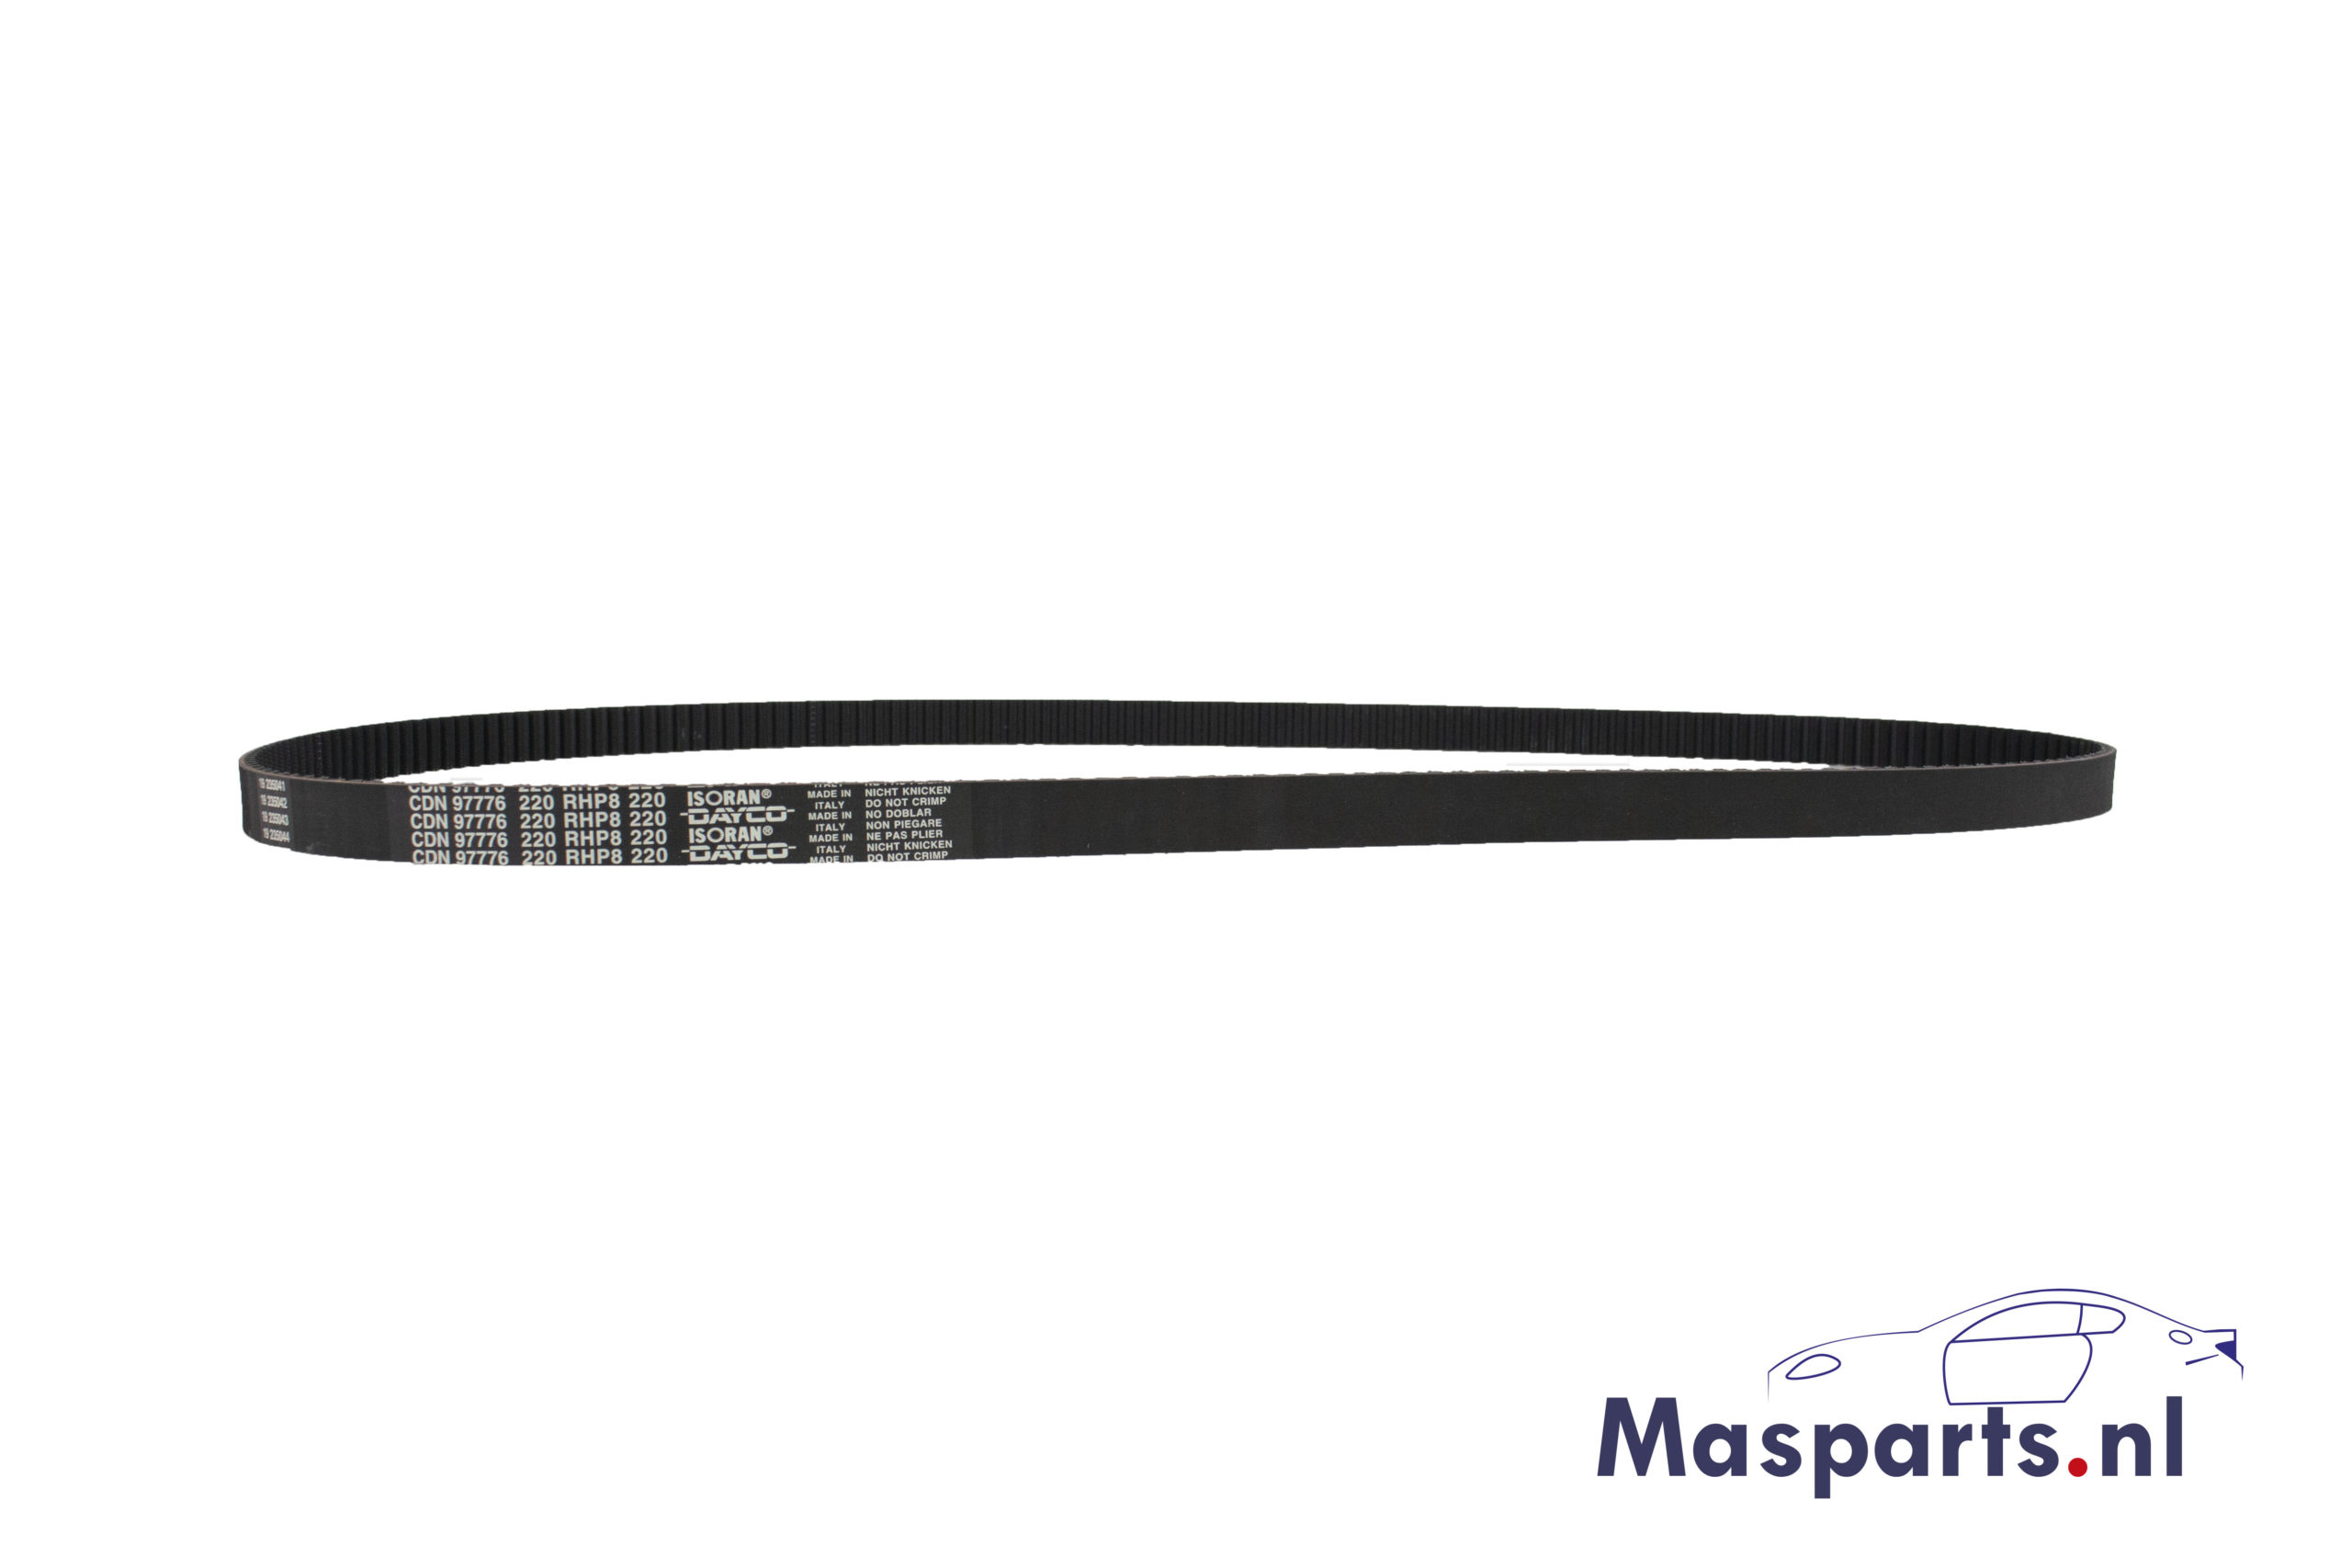 Maserati timing belt for a Maserati Quattroporte Biturbo etc. all 24v